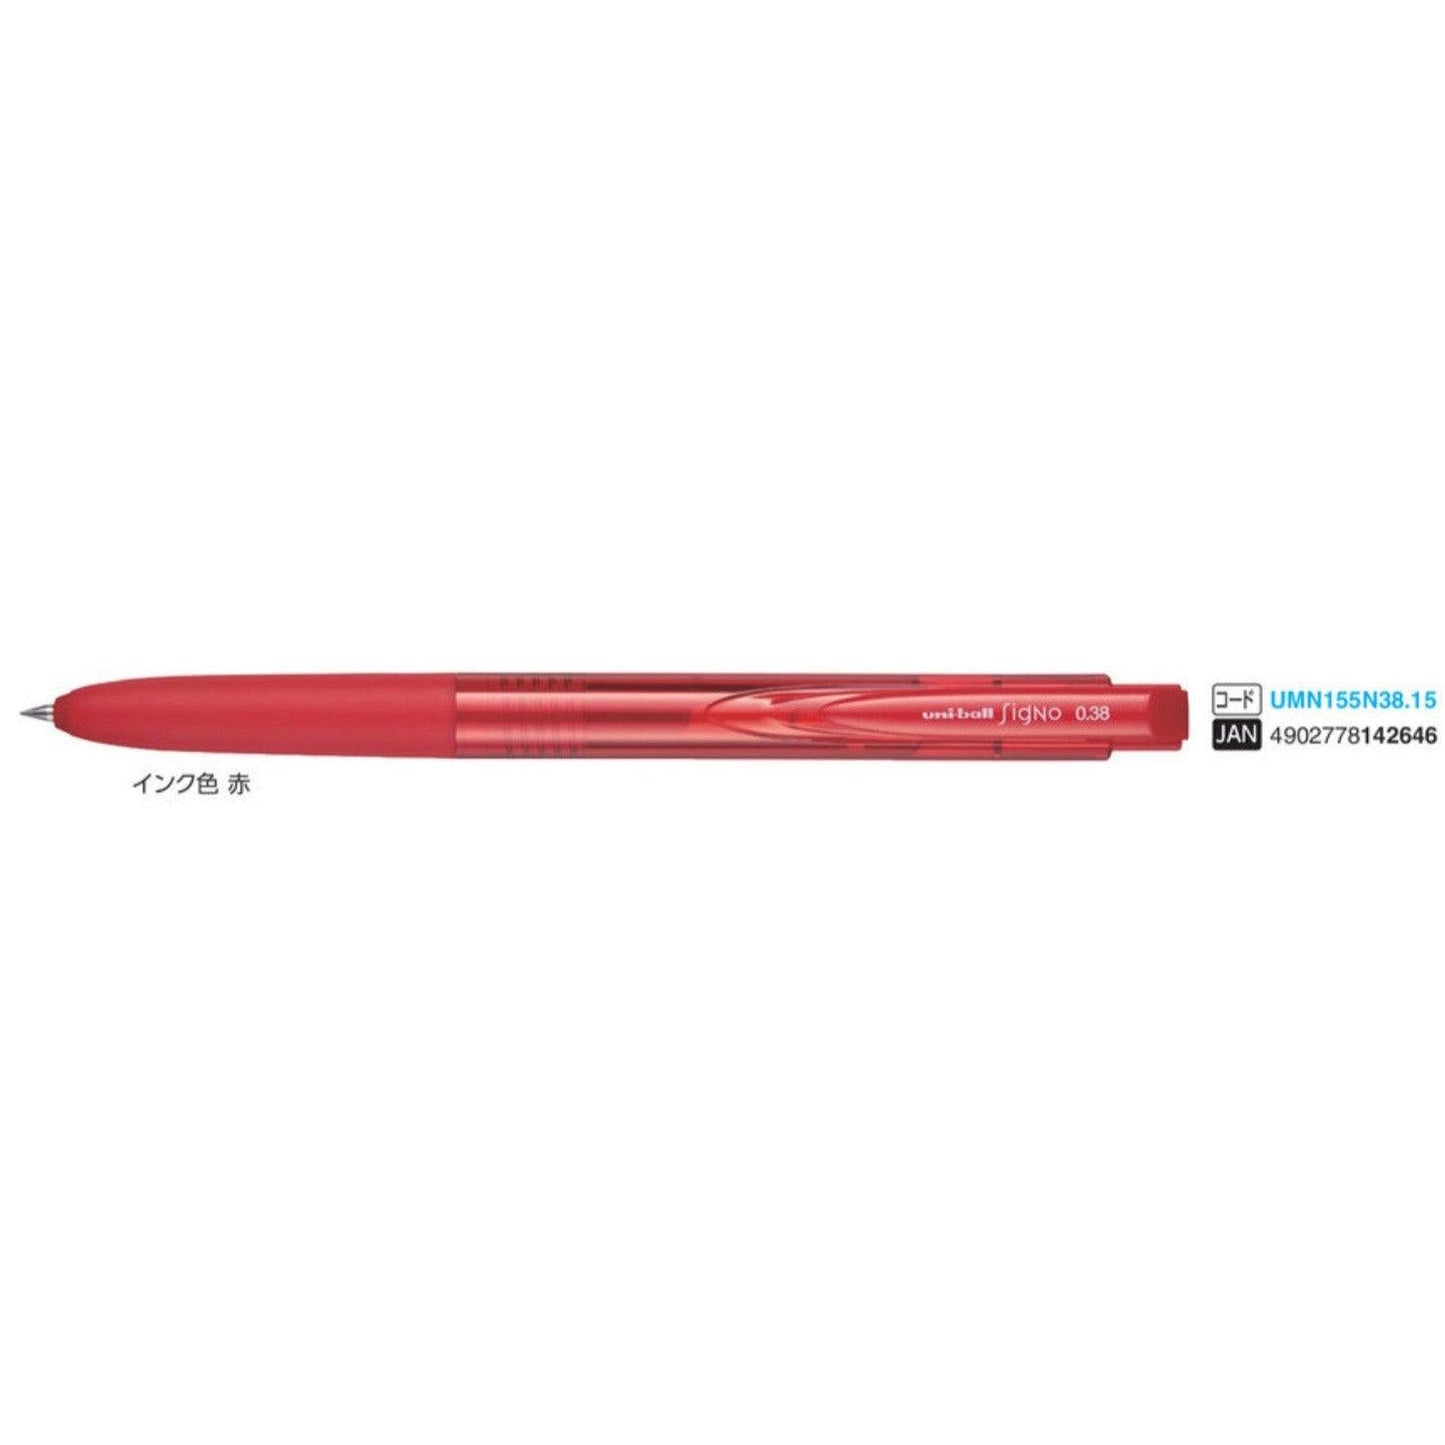 (Pre-Order) UNI Uni-ball Signo RT1 0.28mm/0.38mm/0.5mm ballpoint pen, UMN-155N - CHL-STORE 